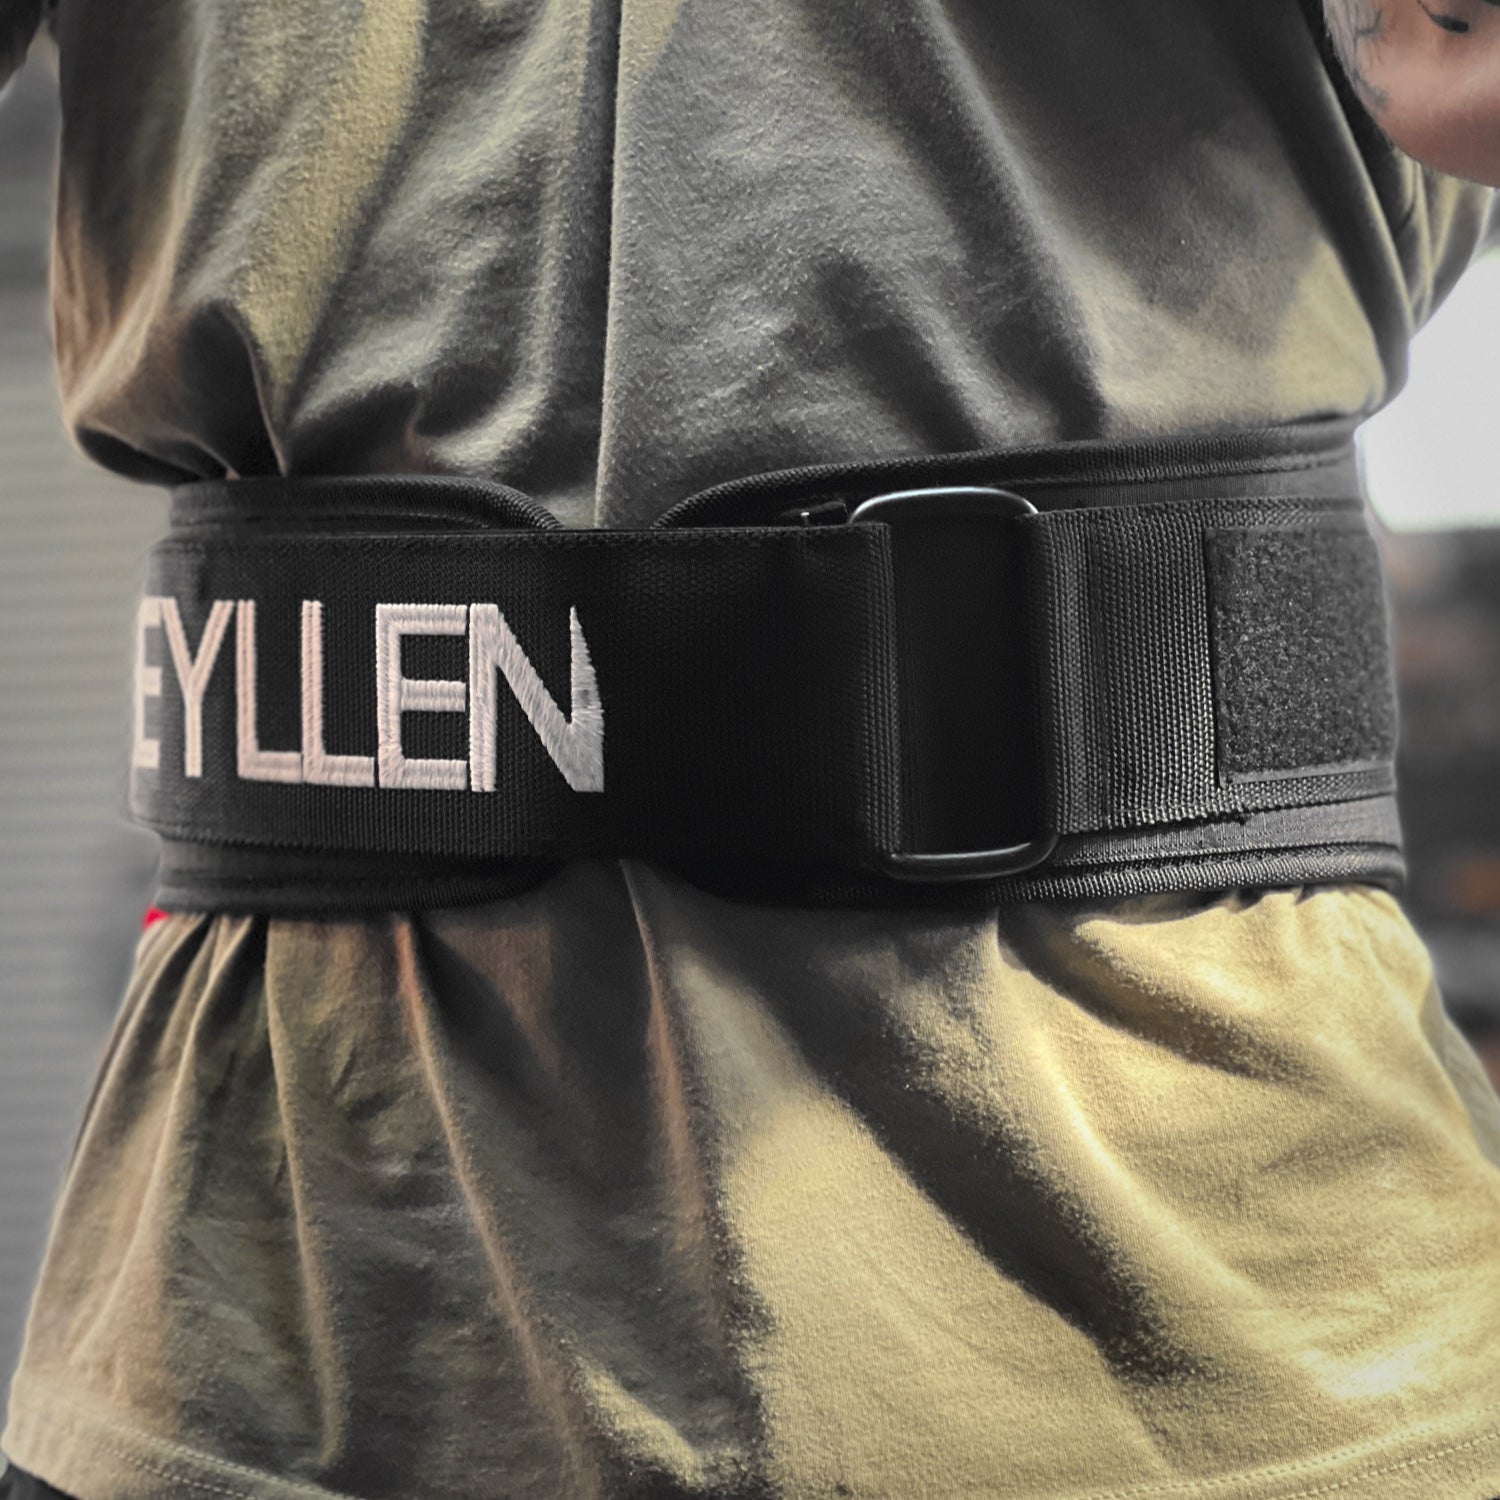 Reyllen X-Prime Weight Lifting Belt EVA Foam Core 5&quot; Taper - shown wearing by man front view